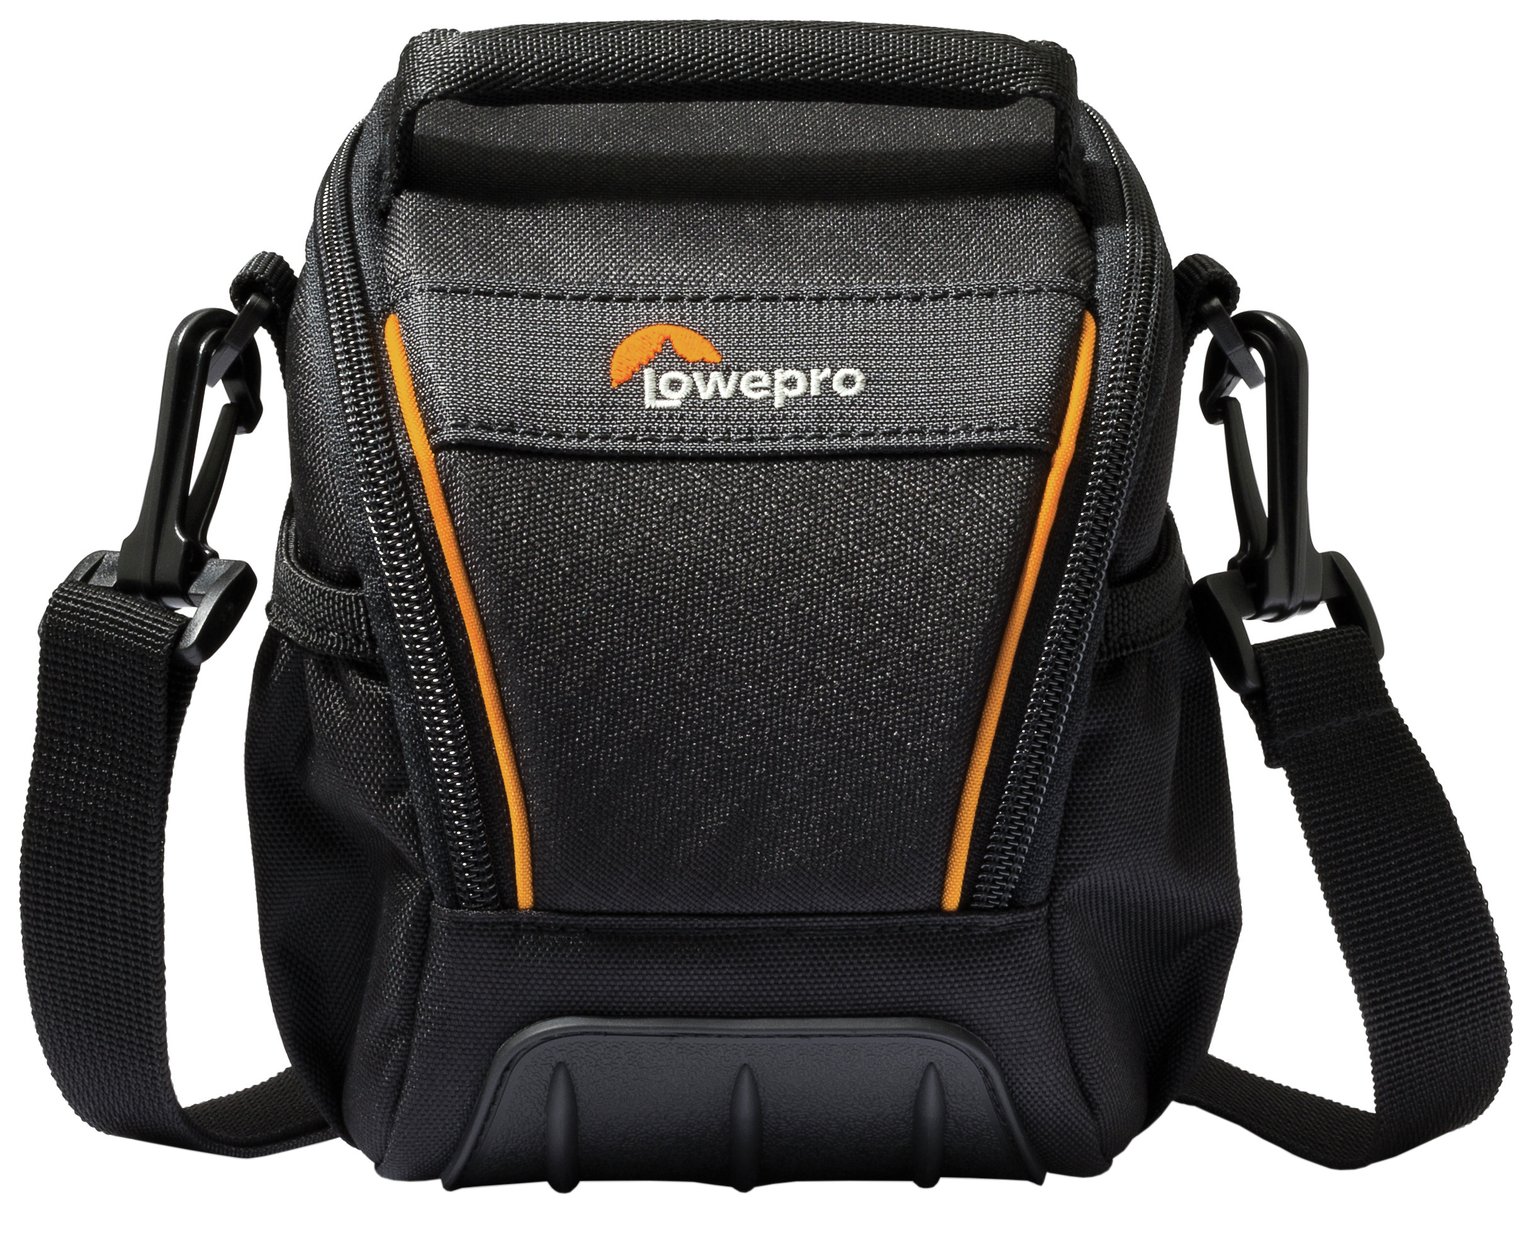 Lowepro Adventura SH100 LL Compact System Camera Bag